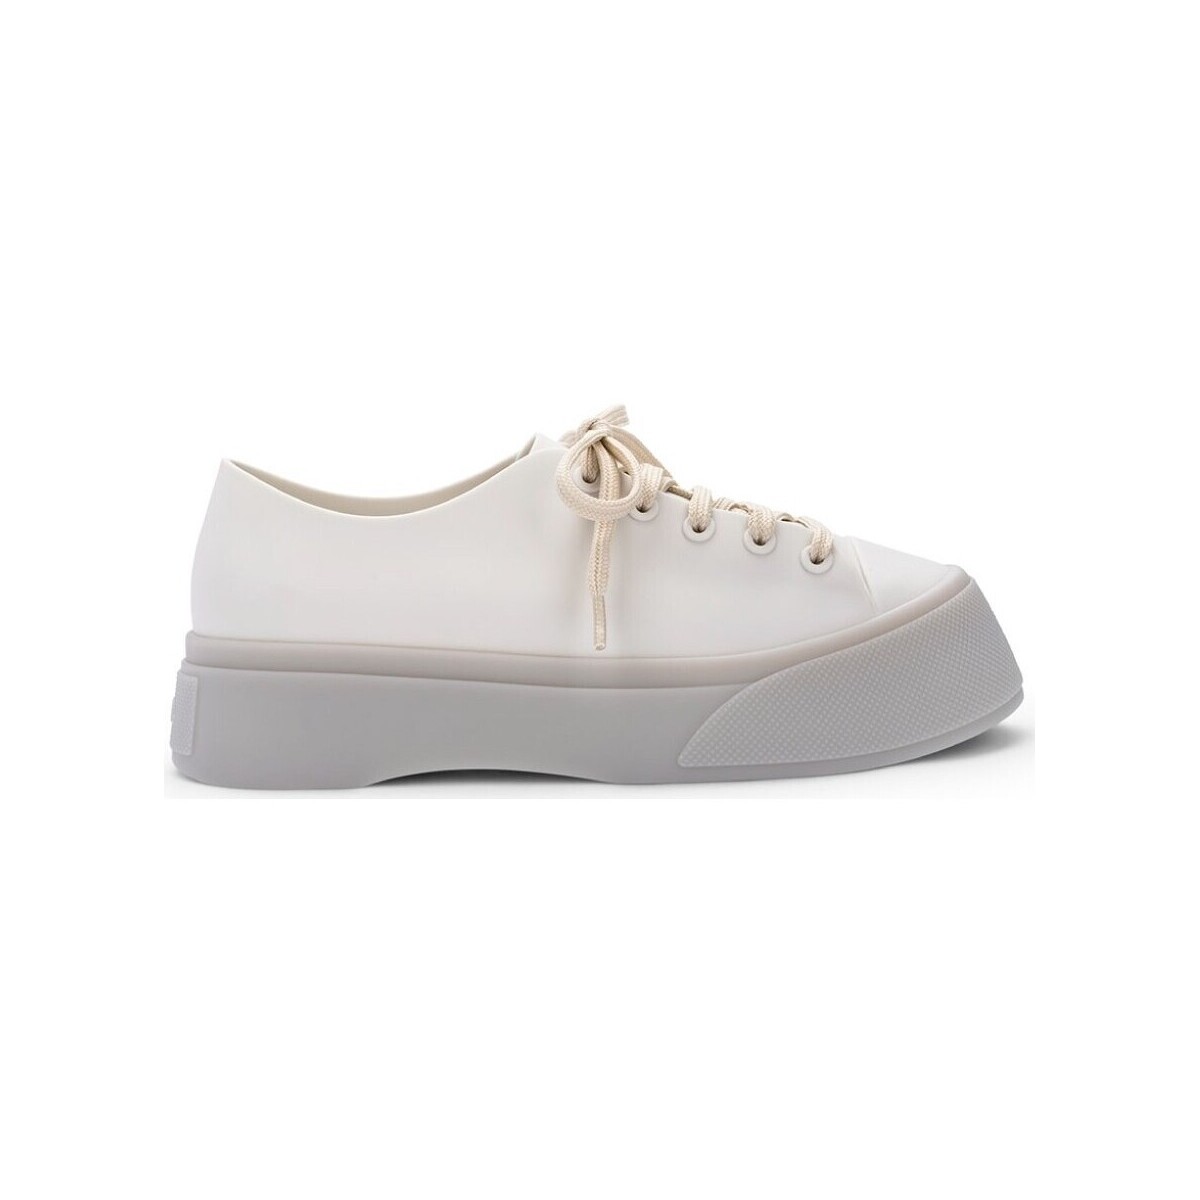 Scarpe Donna Sneakers Melissa Drive - White Beige Bianco